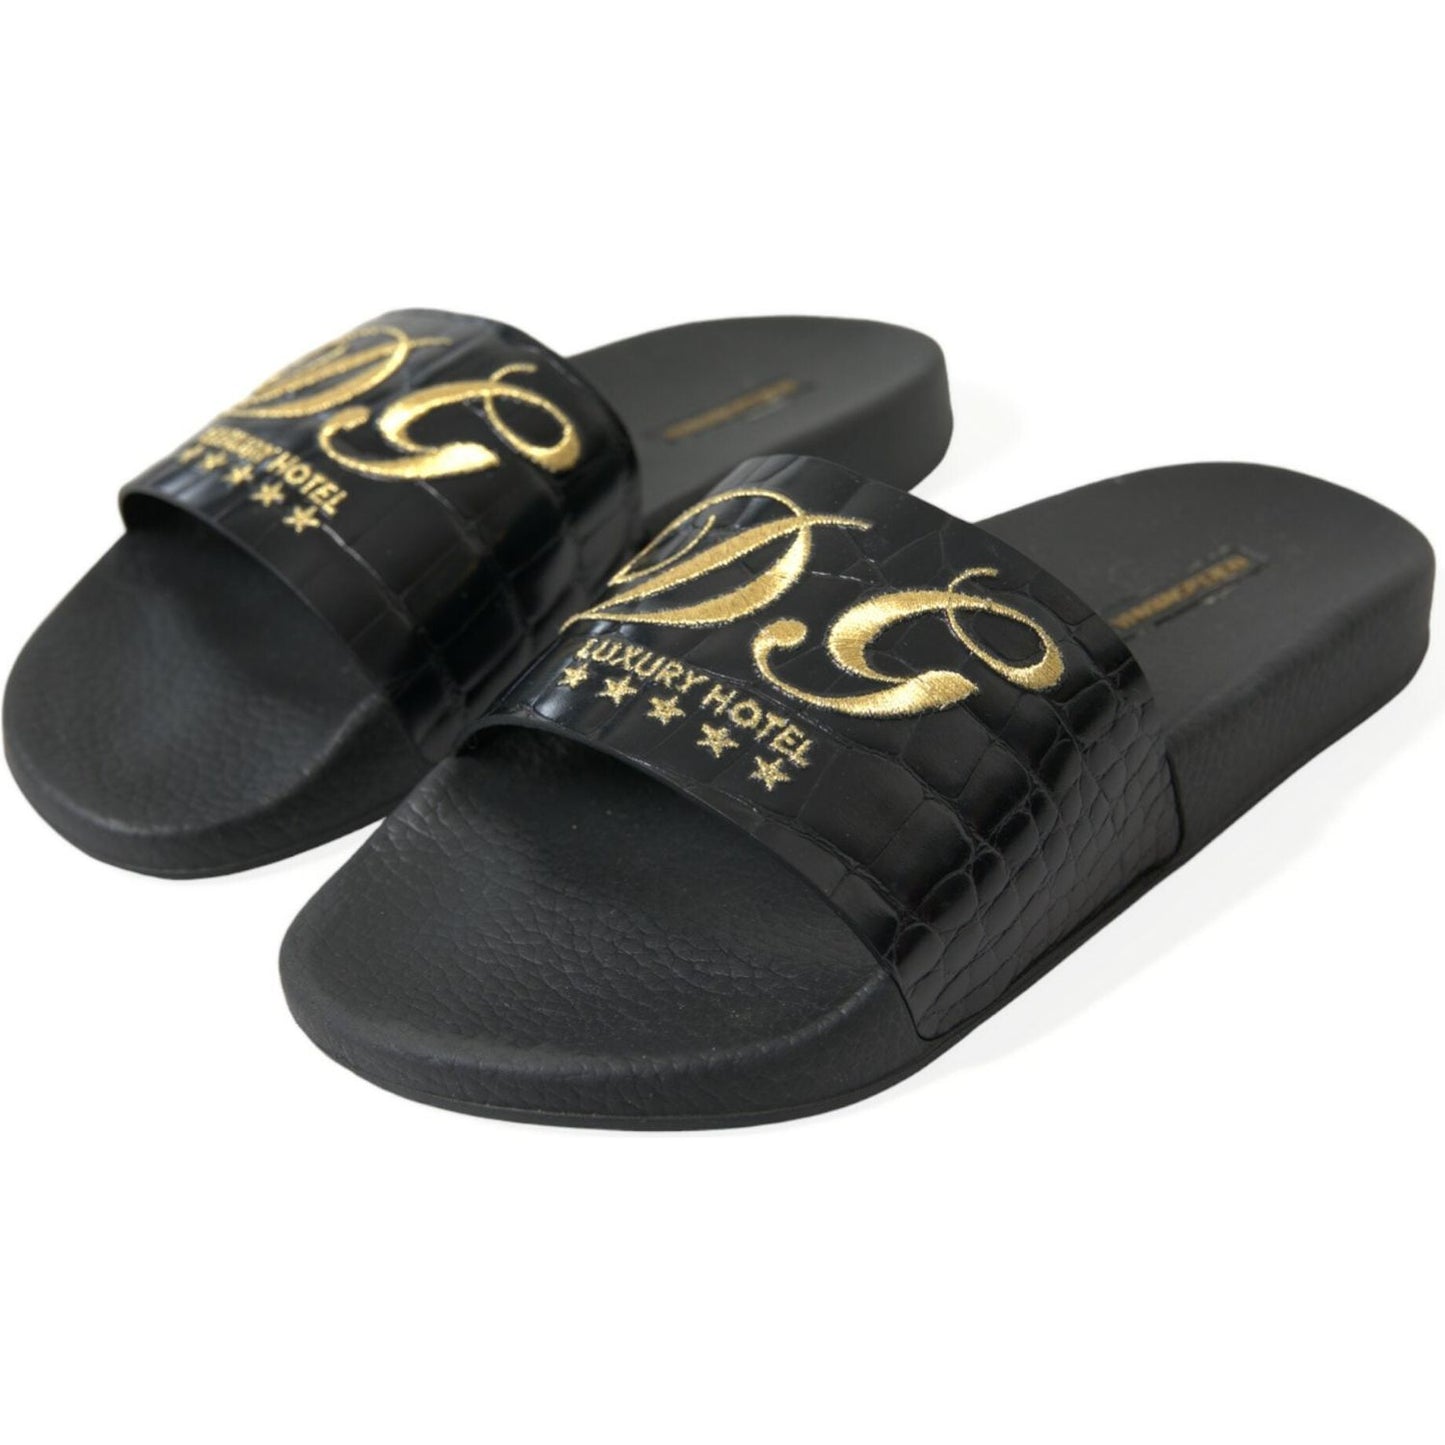 Dolce & Gabbana Elegant Black and Gold Leather Slides black-luxury-hotel-beachwear-sandals-shoes